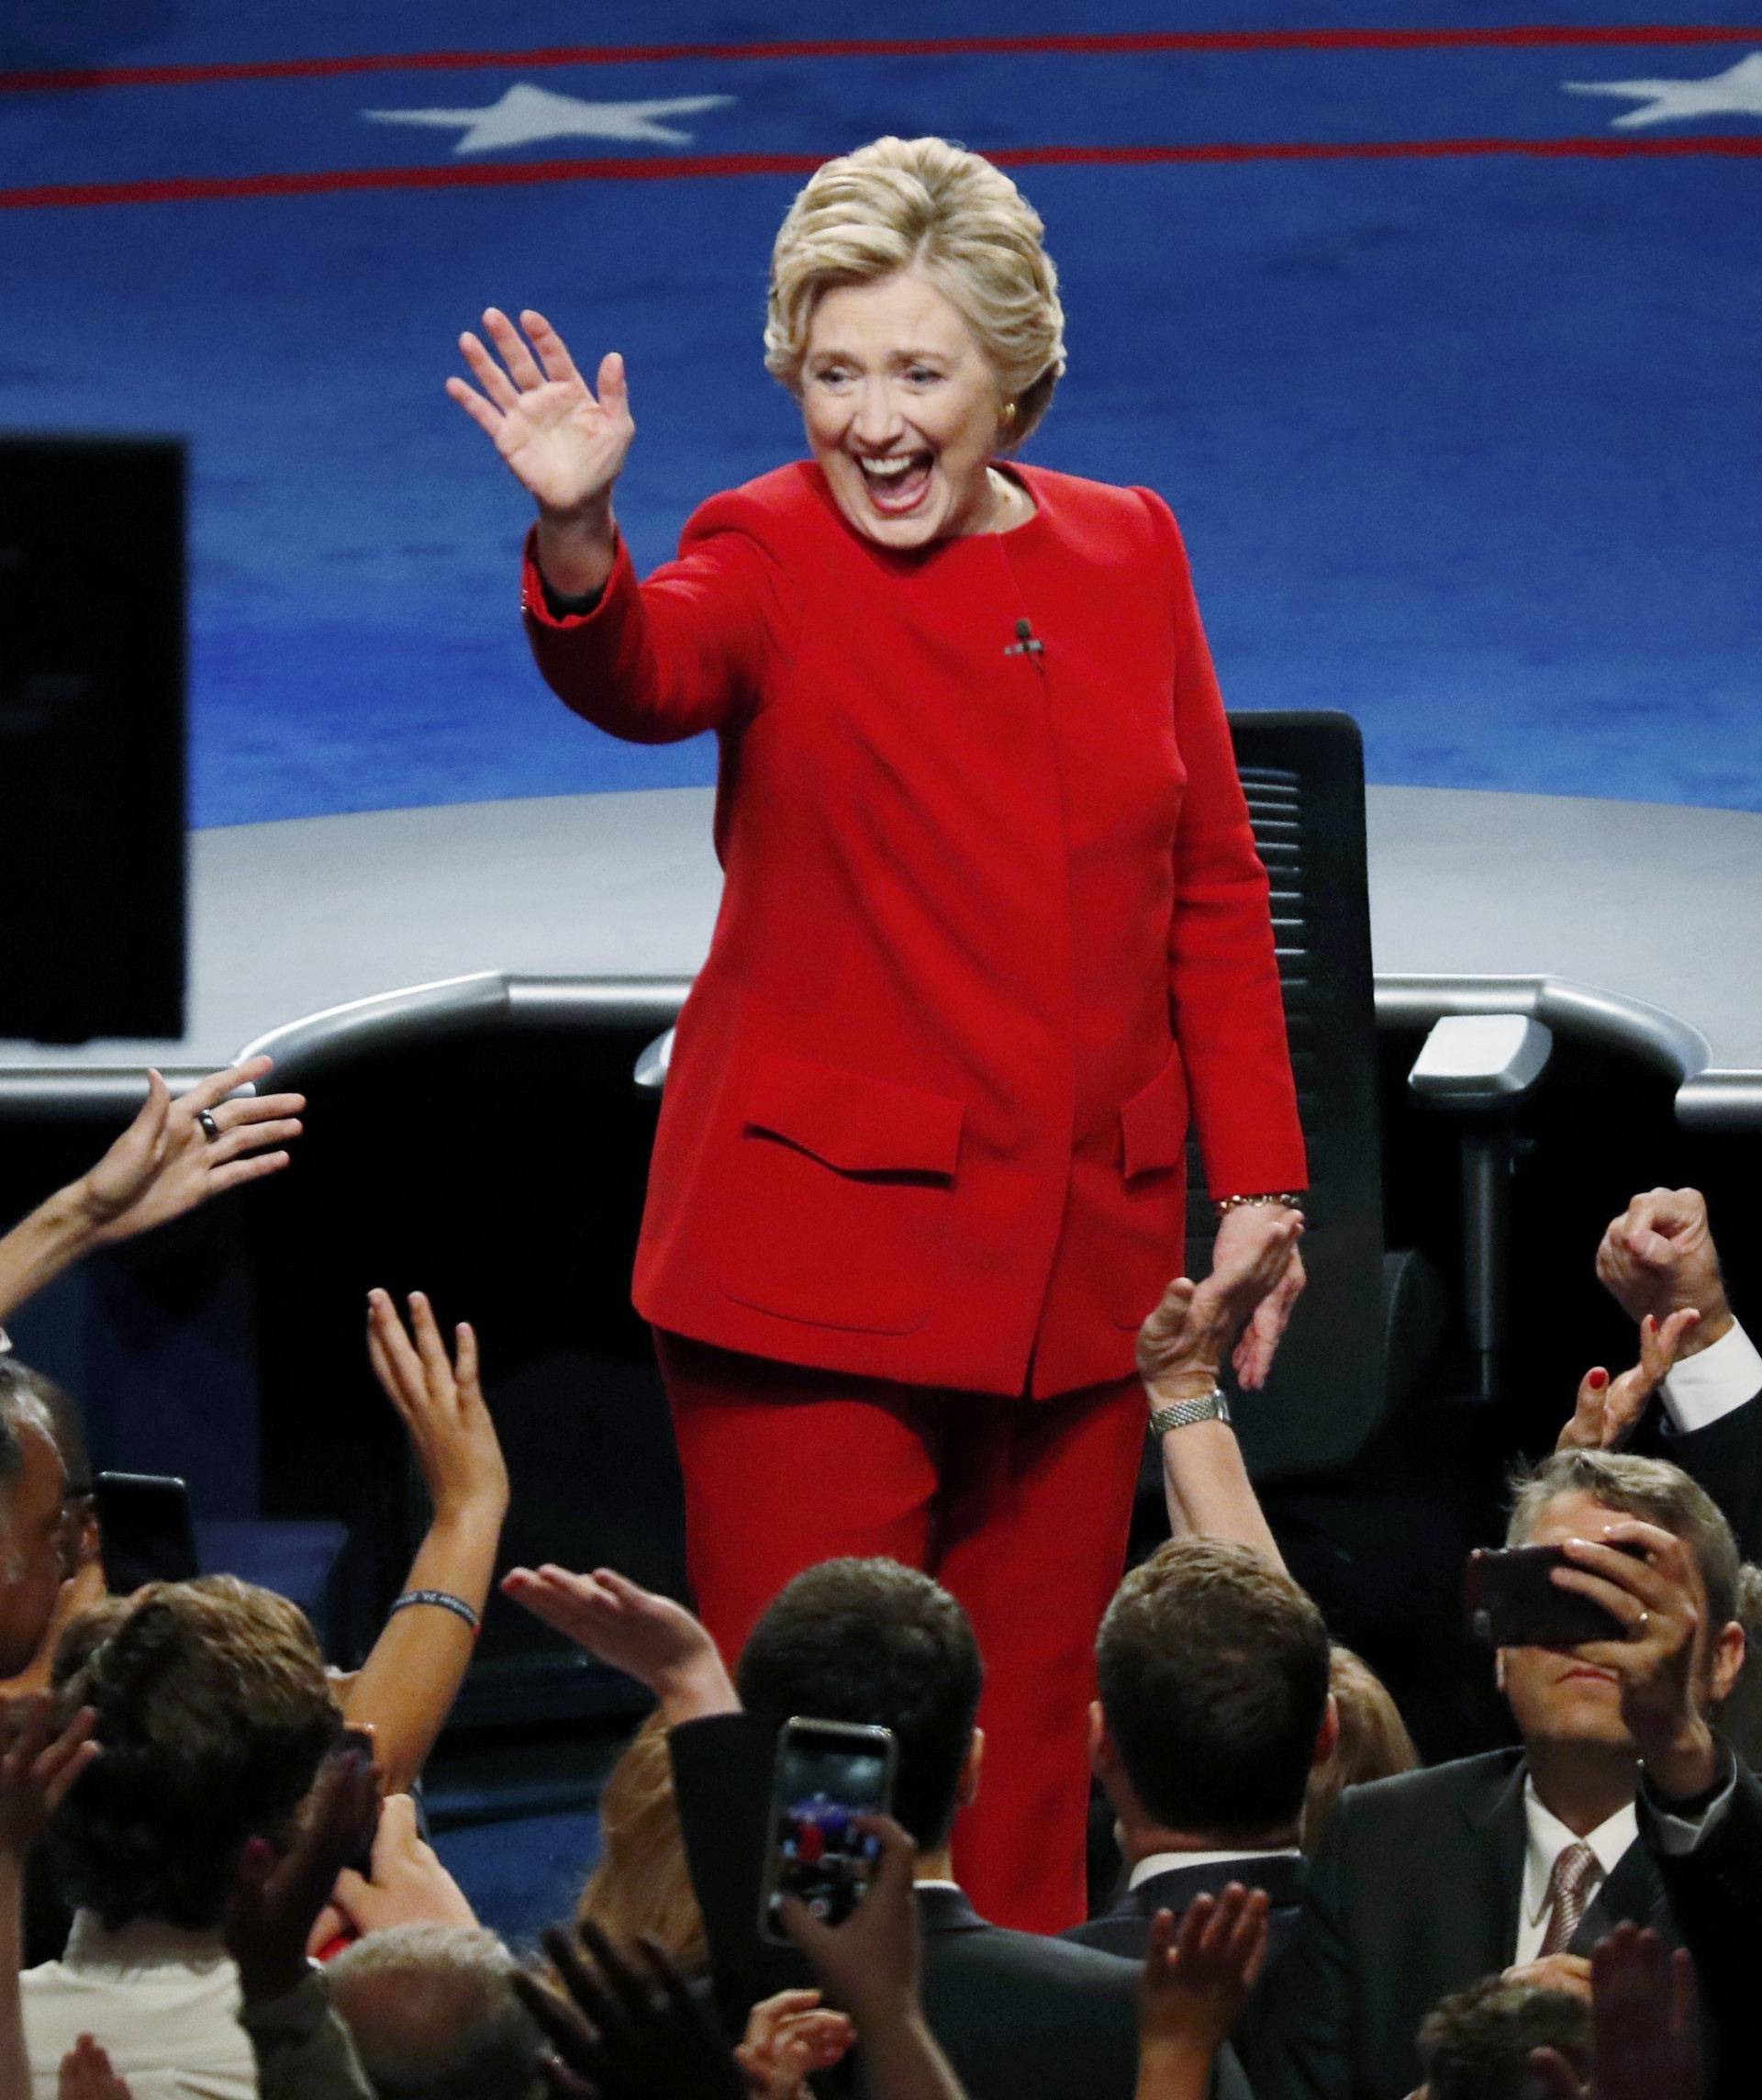 Democratic U.S. presidential nominee Hillary Clinton waves after the first presidential debate against Republican U.S. presidential nominee Donald Trump at Hofstra University in Hempstead